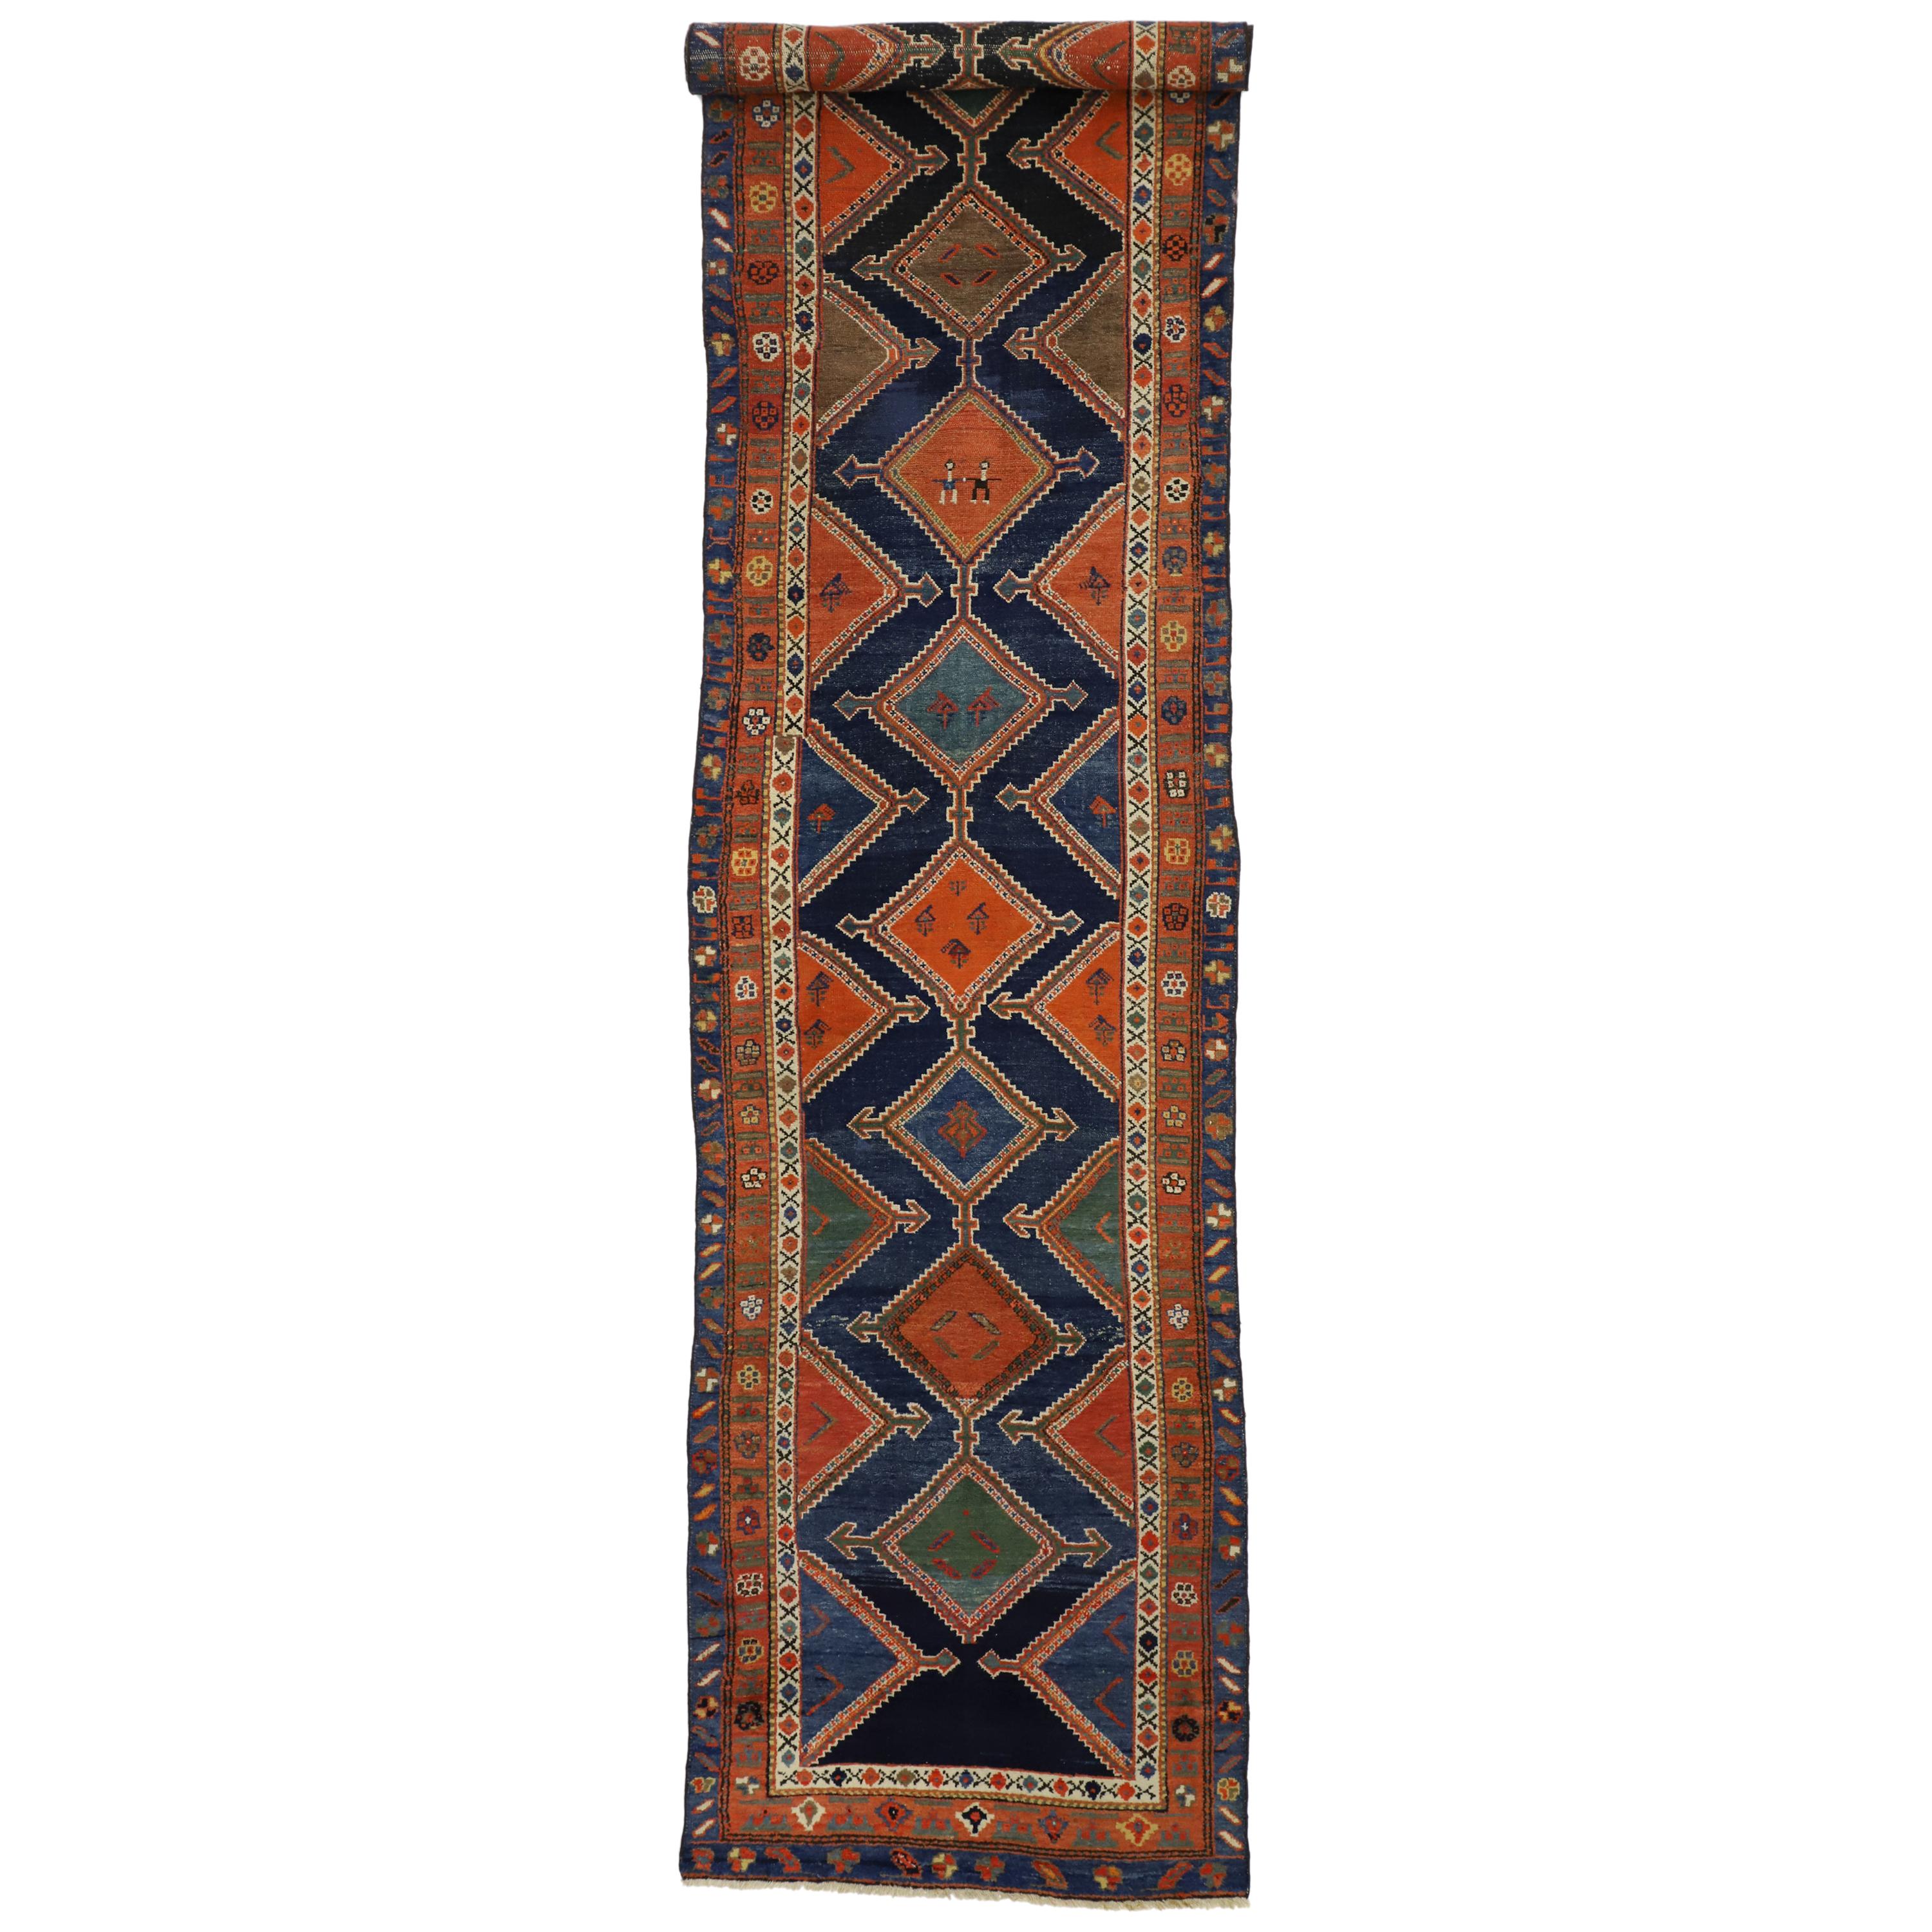 Antique Persian Hamadan Chenar Runner with Tribal Art Deco Style